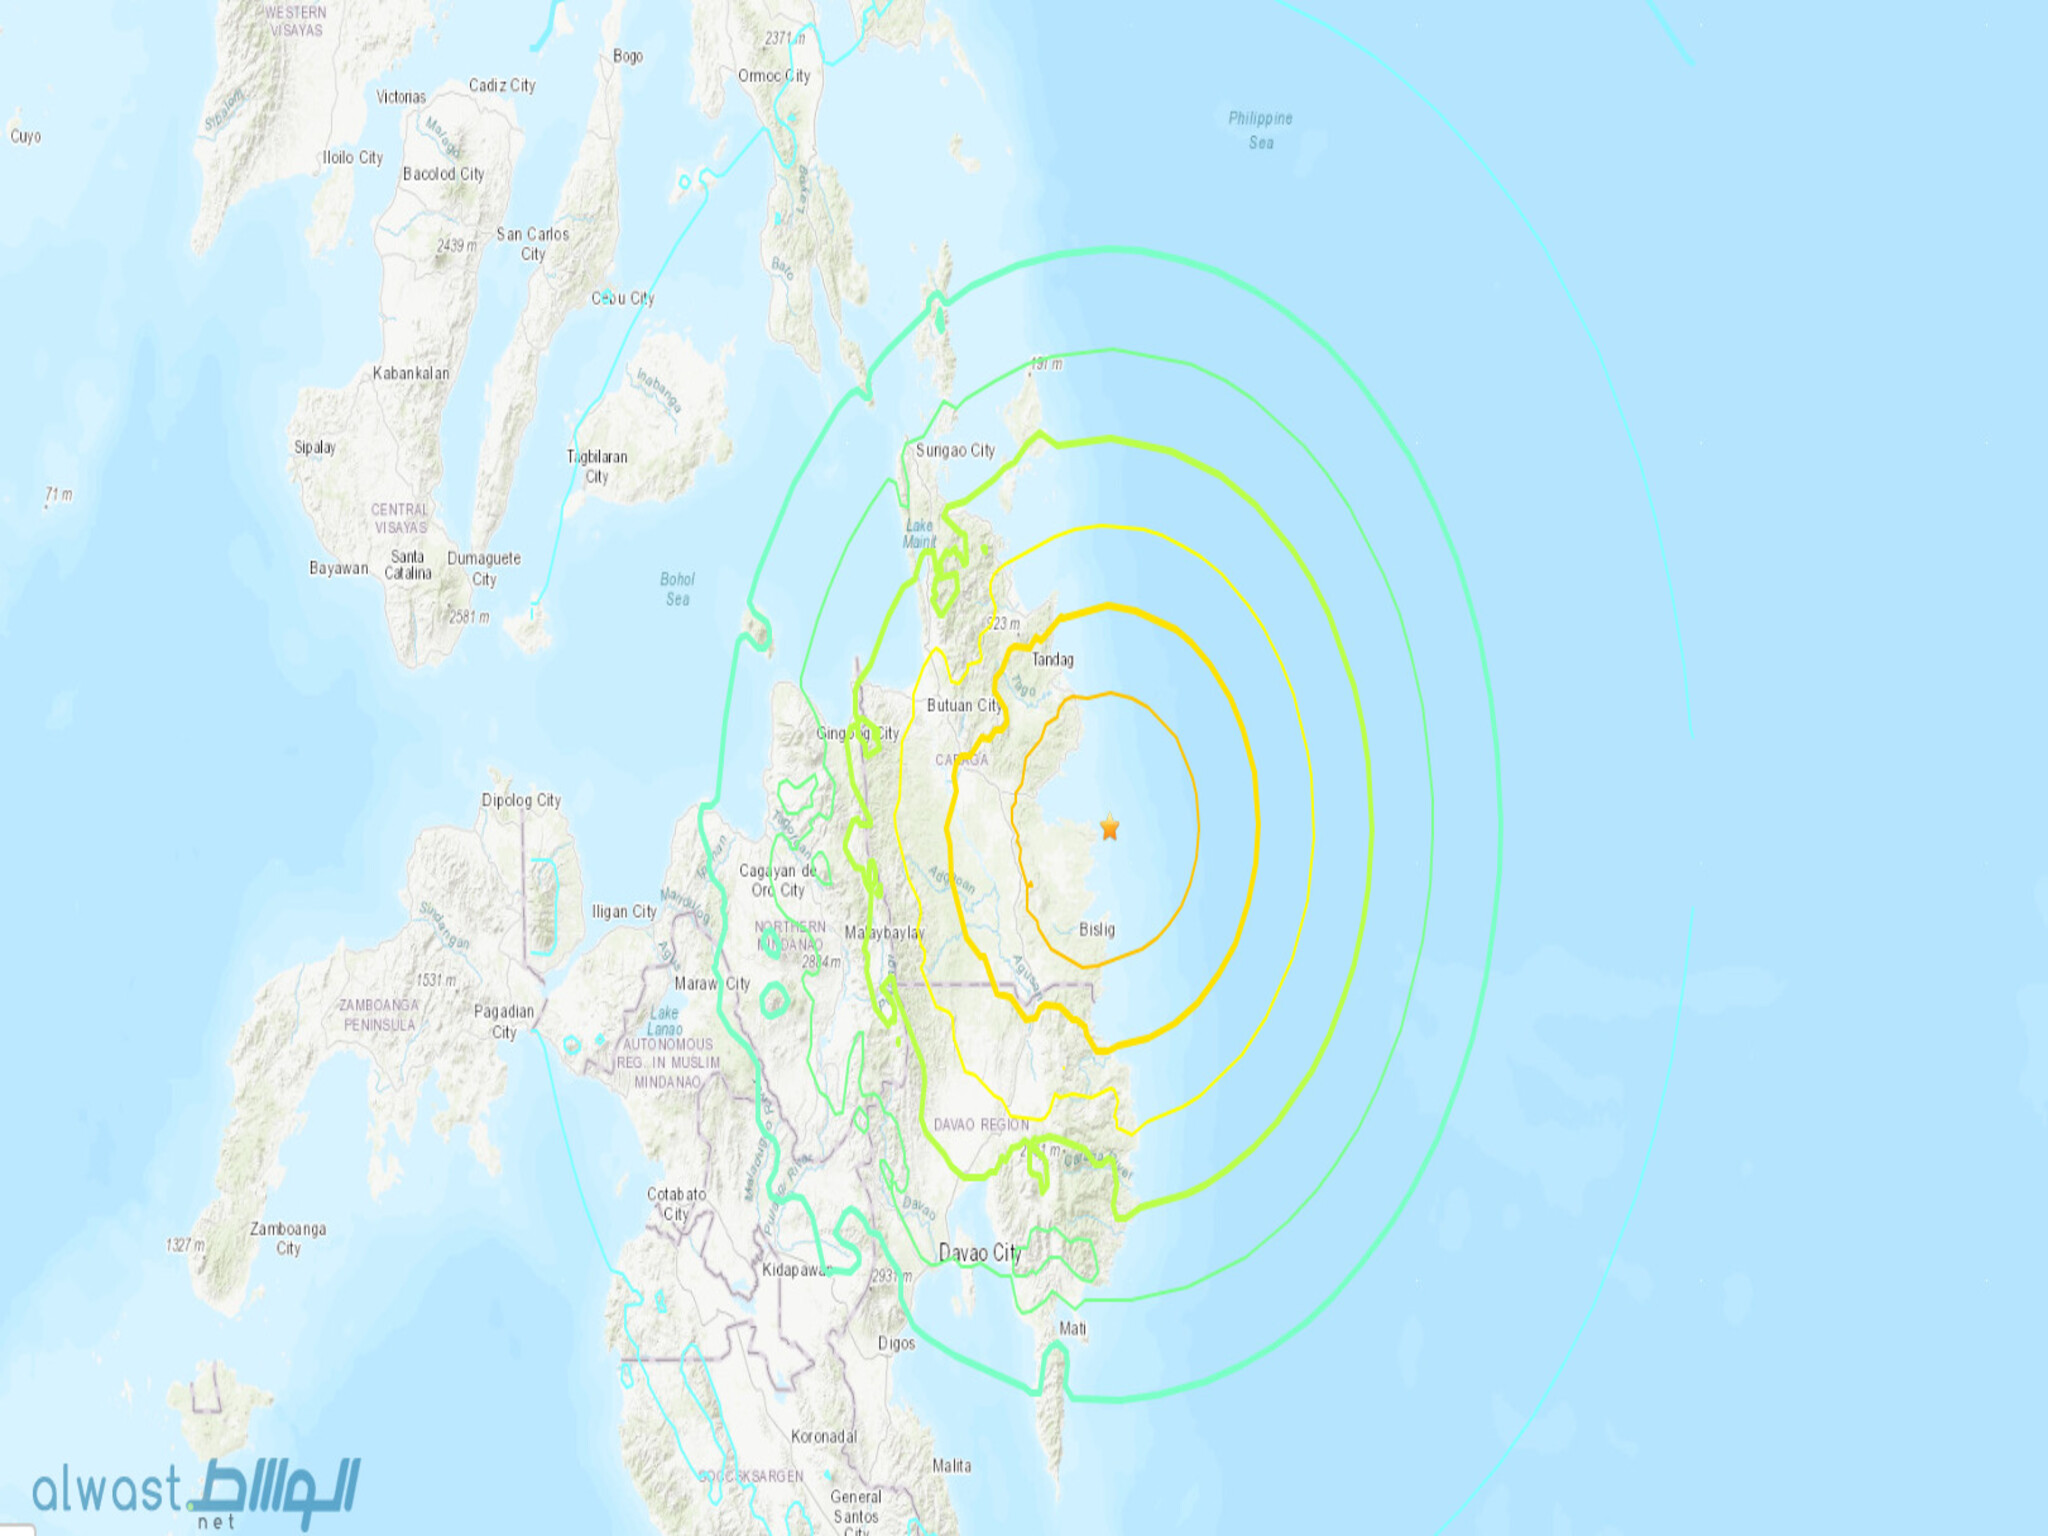 Philippines issues Tsunami Warning Following 7.6-Magnitude Earthquake